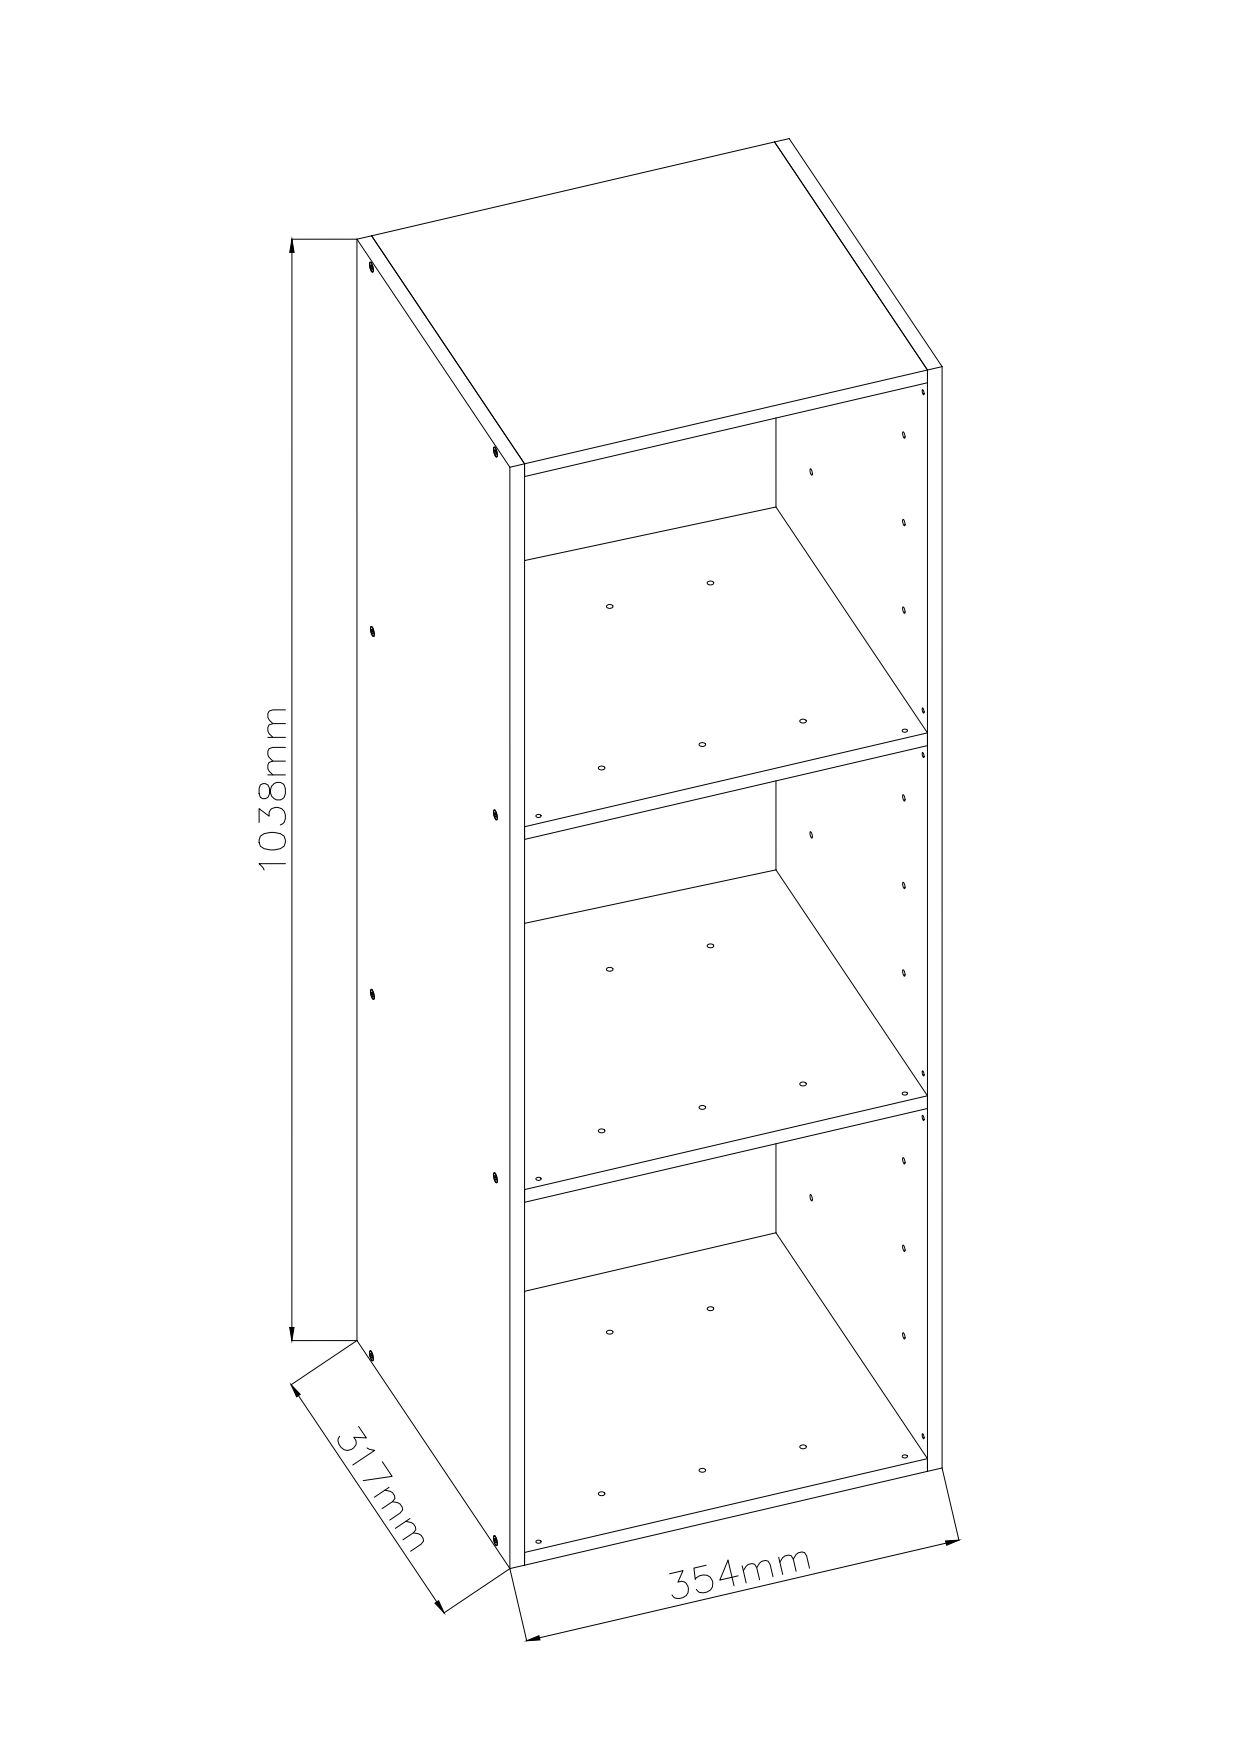 GoodHome Konnect Oak effect 3 shelf Cube Bookcase, (H)1038mm (W)354mm